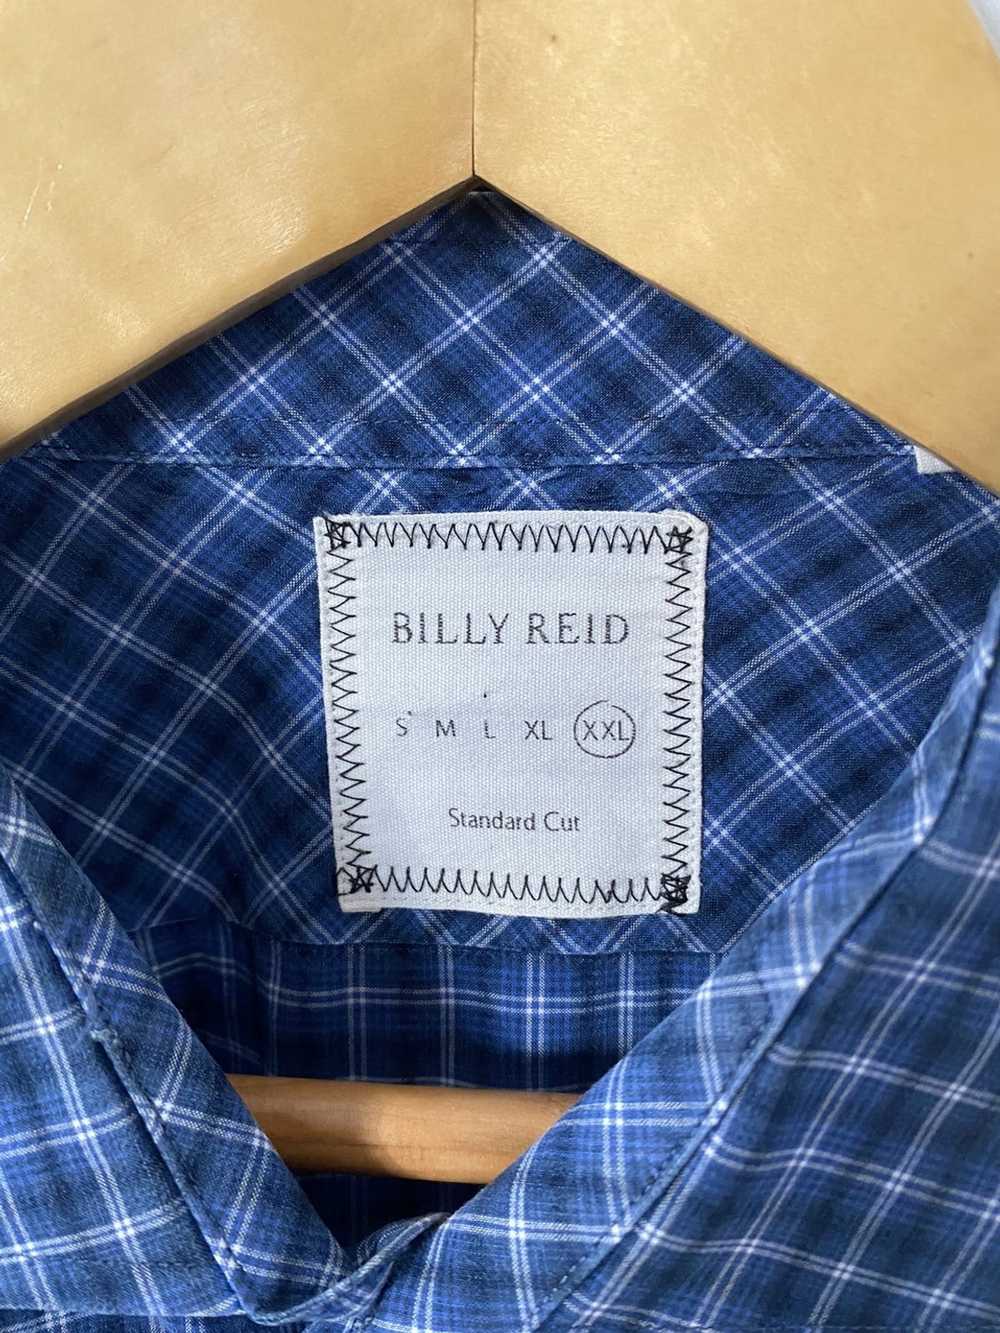 Billy Reid Dark Blue Plaid Shirt - image 3